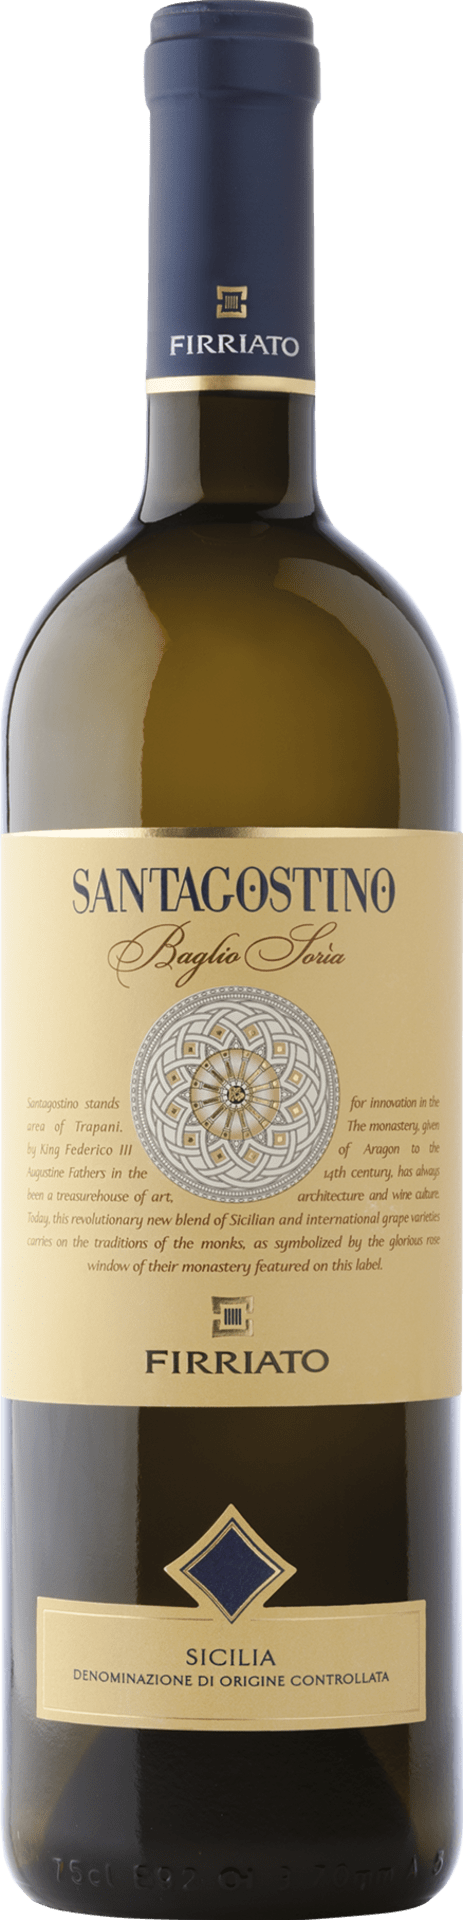 Santagostino Baglio Soria Bianco Terre Siciliane IGT